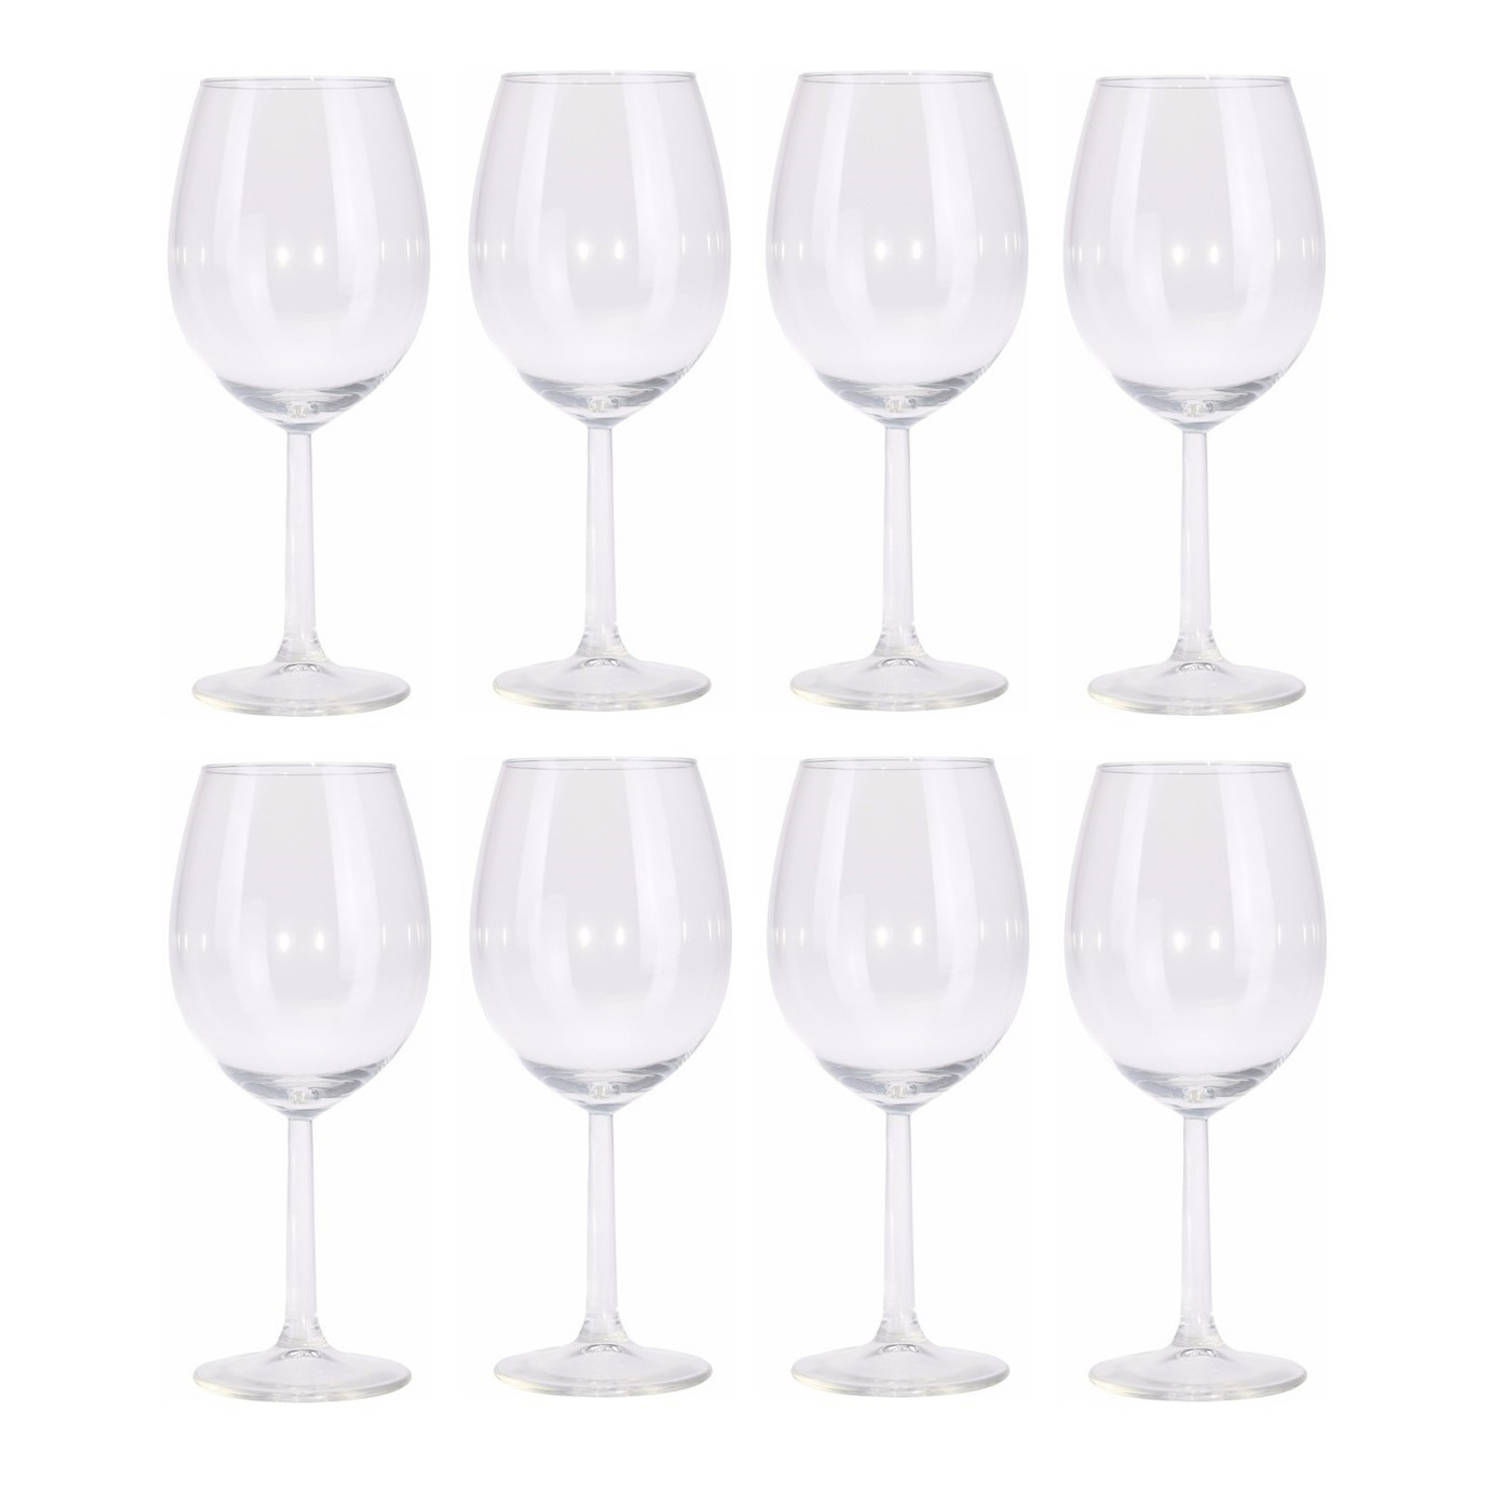 8x Witte wijn glazen transparant 430 ml - Wijnglazen